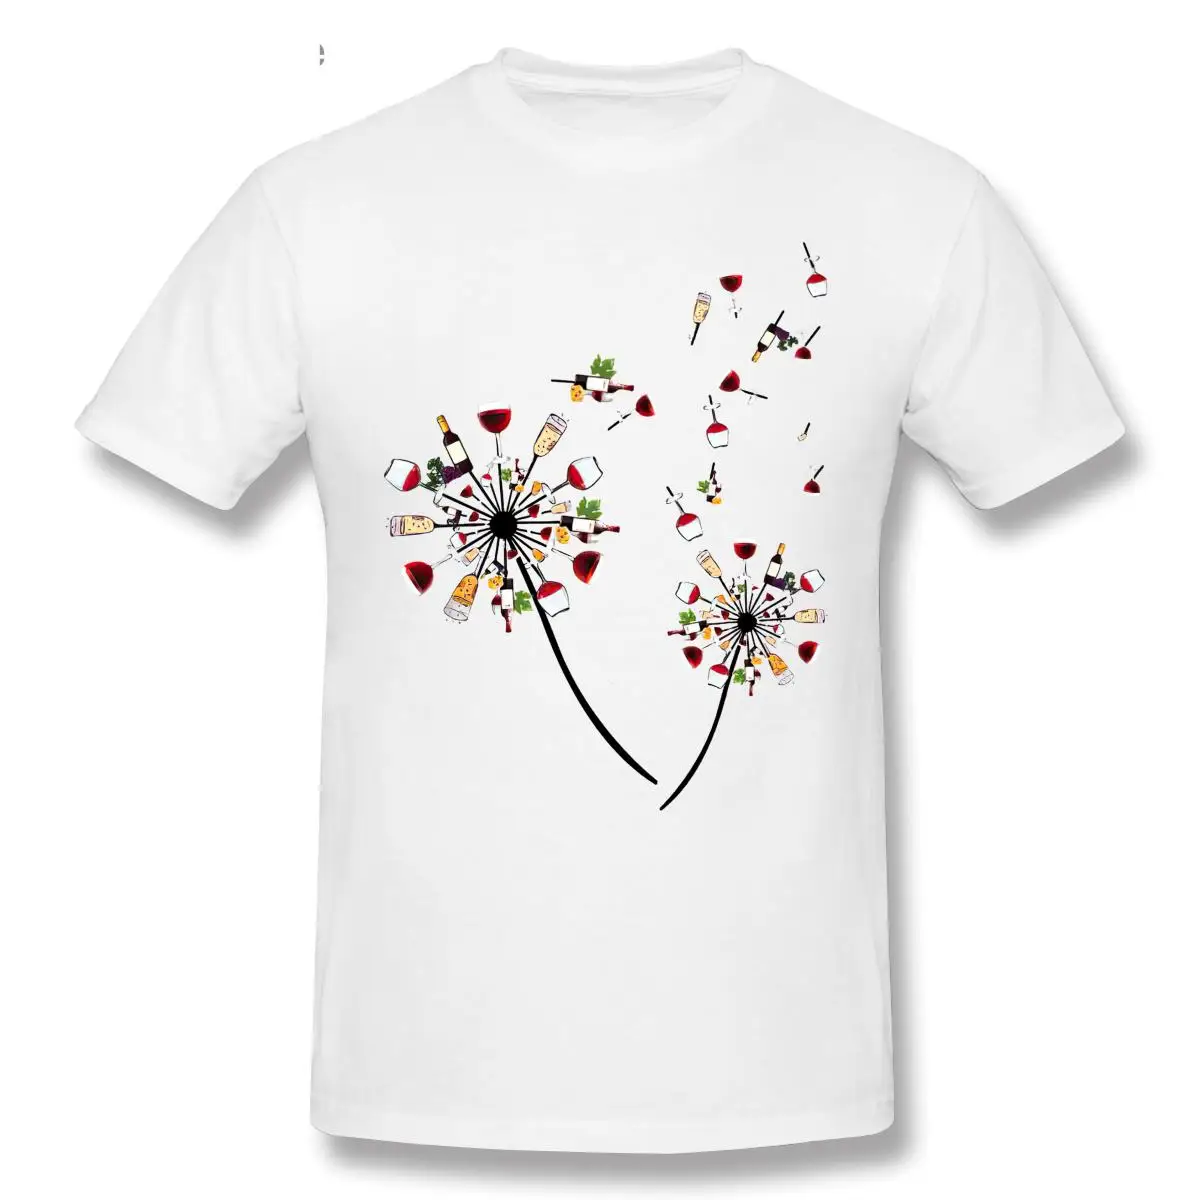 

Dandelion Wine T Shirt Summer Graphic T-shirt Short Sleeves Tshirt Tee Tops